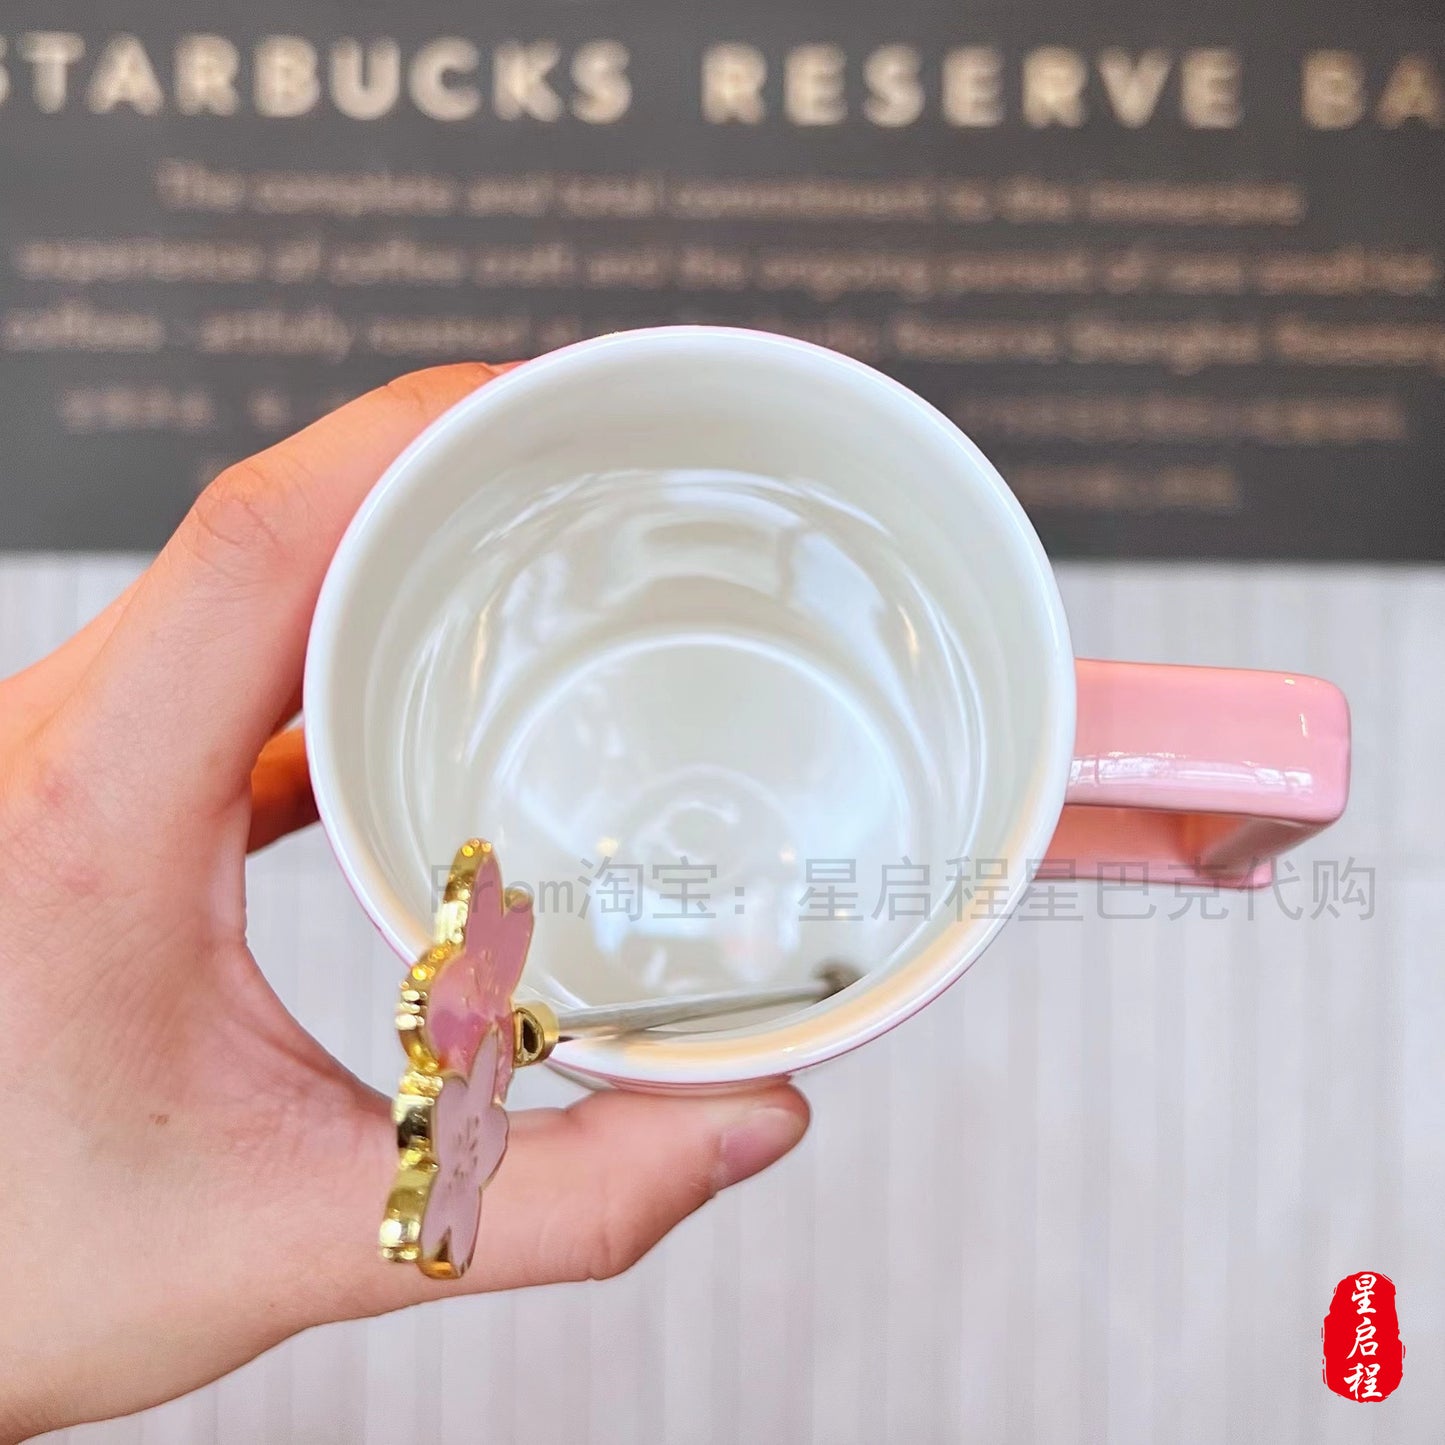 Starbucks China 2022 Sakura Season 473ml yellow bird with pink sakura view ceramics mug with stir bar